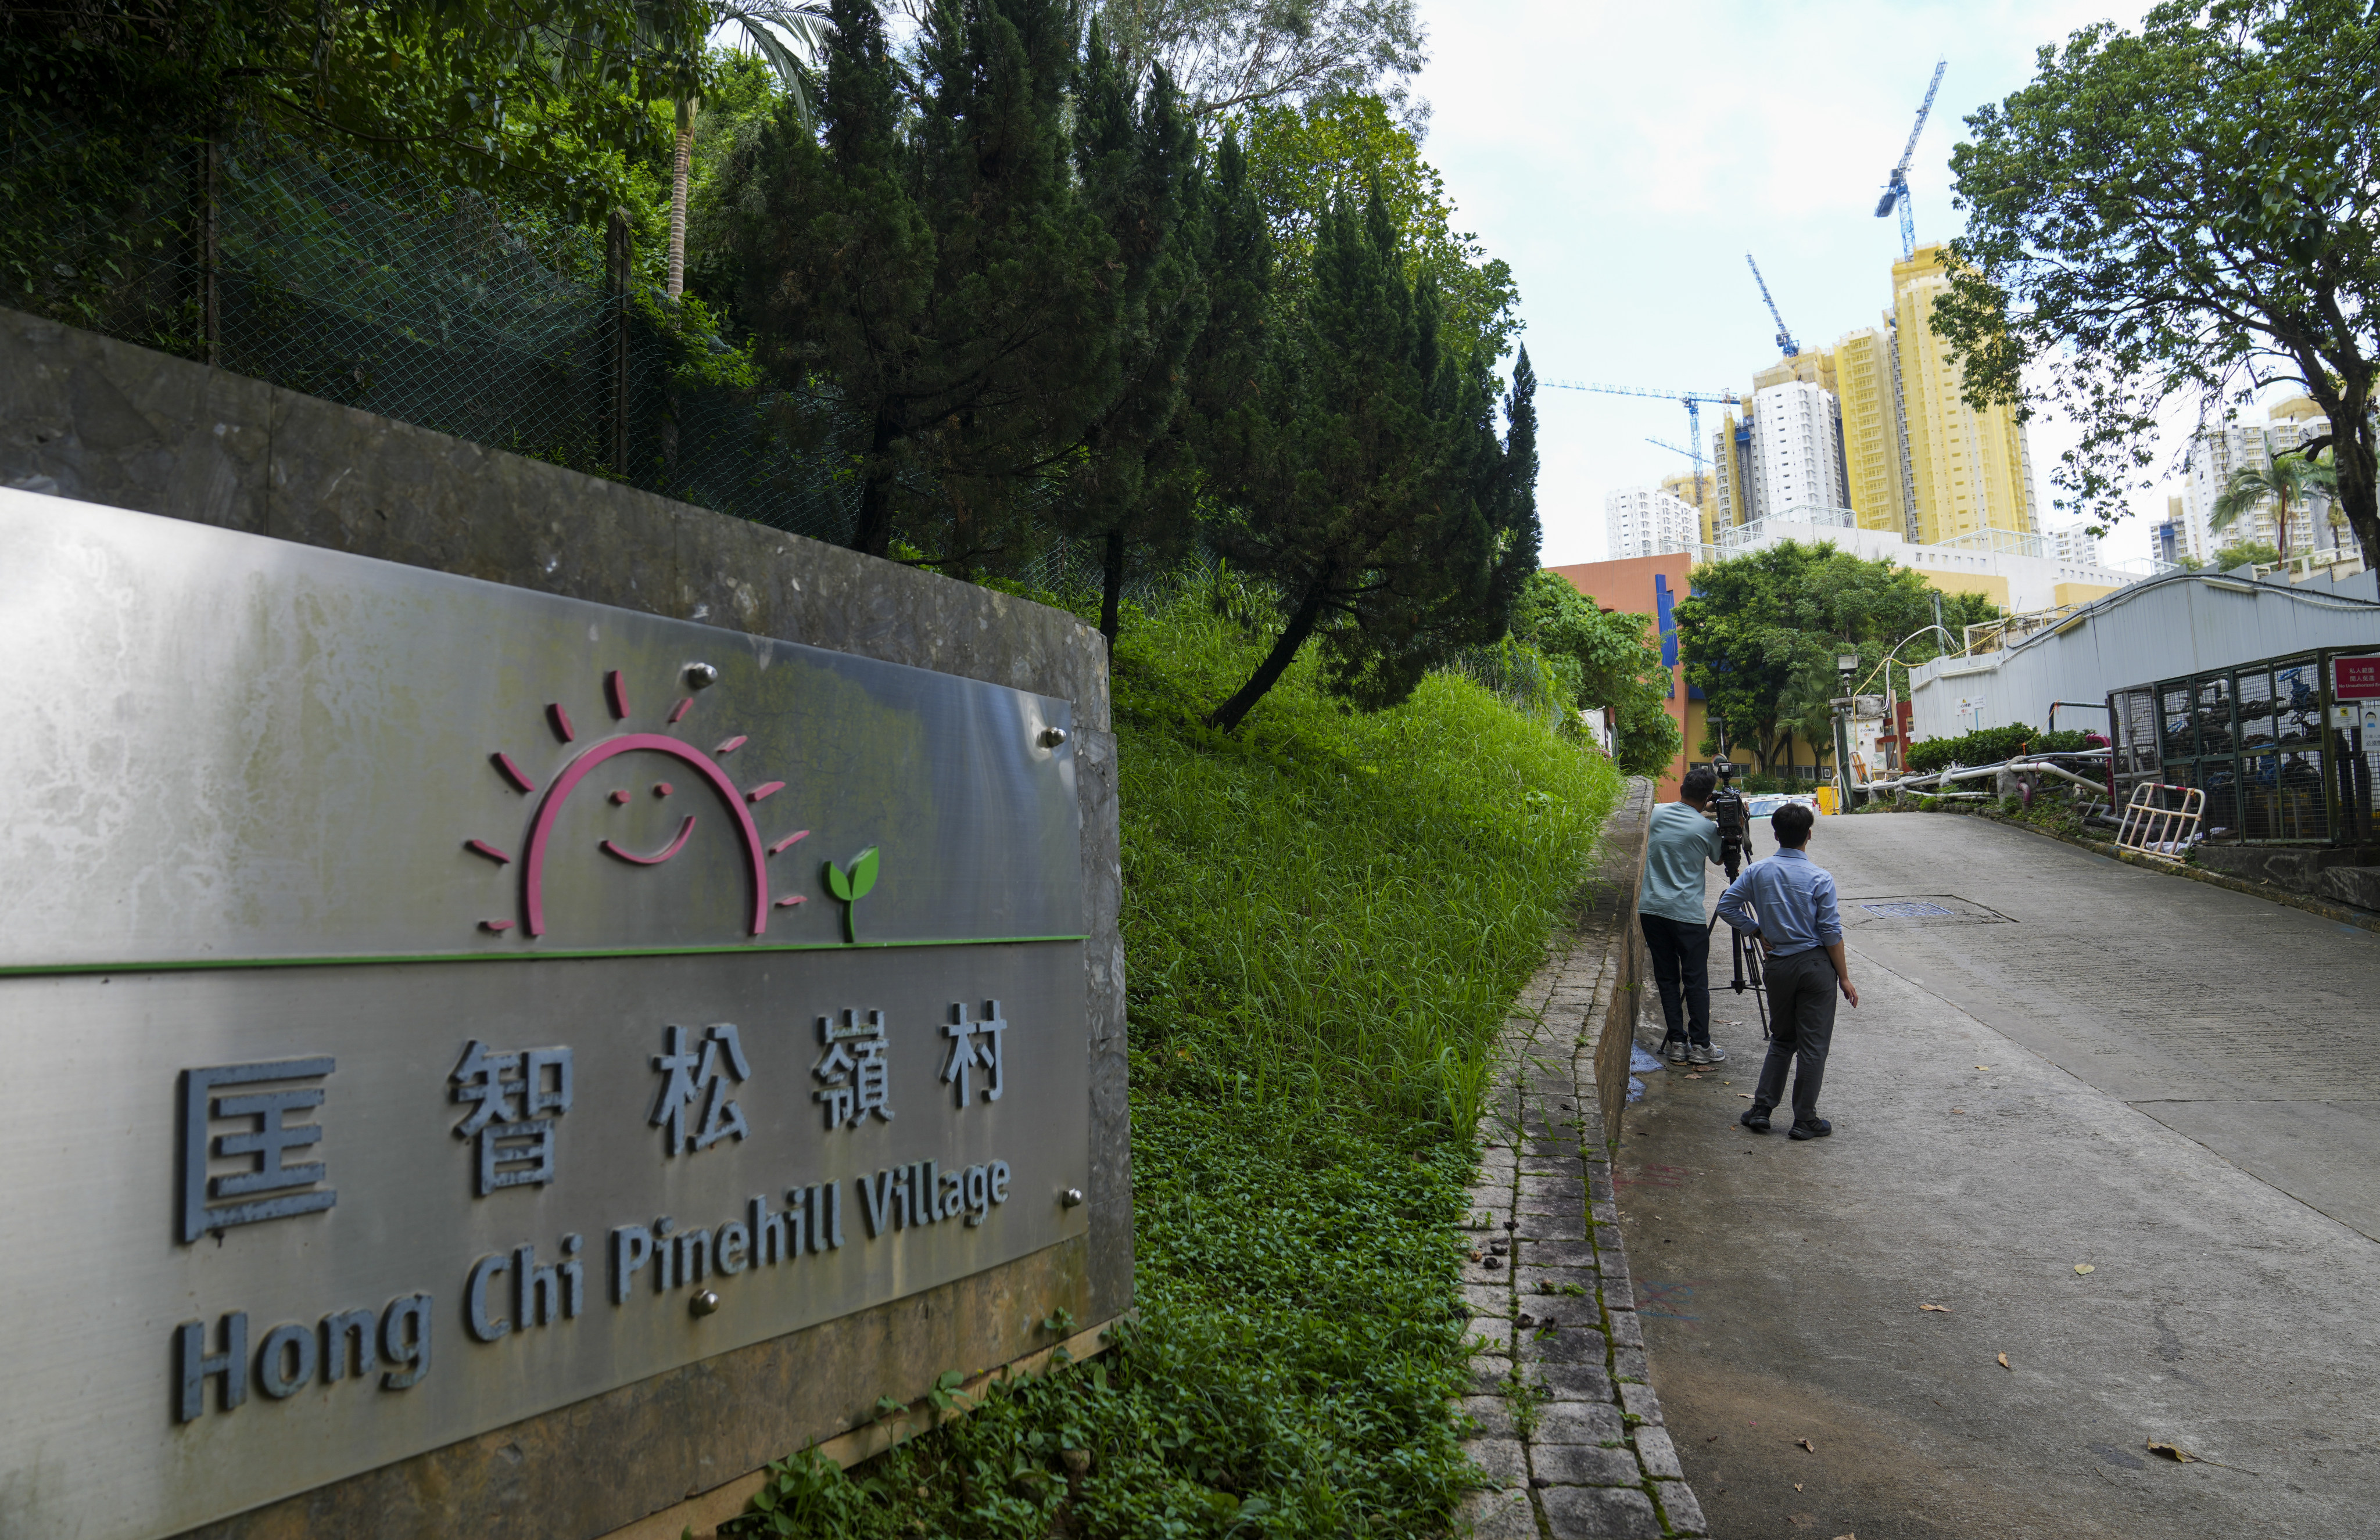 The education Bureau has received eight complaints against Hong Chi Pinehill No 2 School in Tai Po.  Photo: Sam Tsang